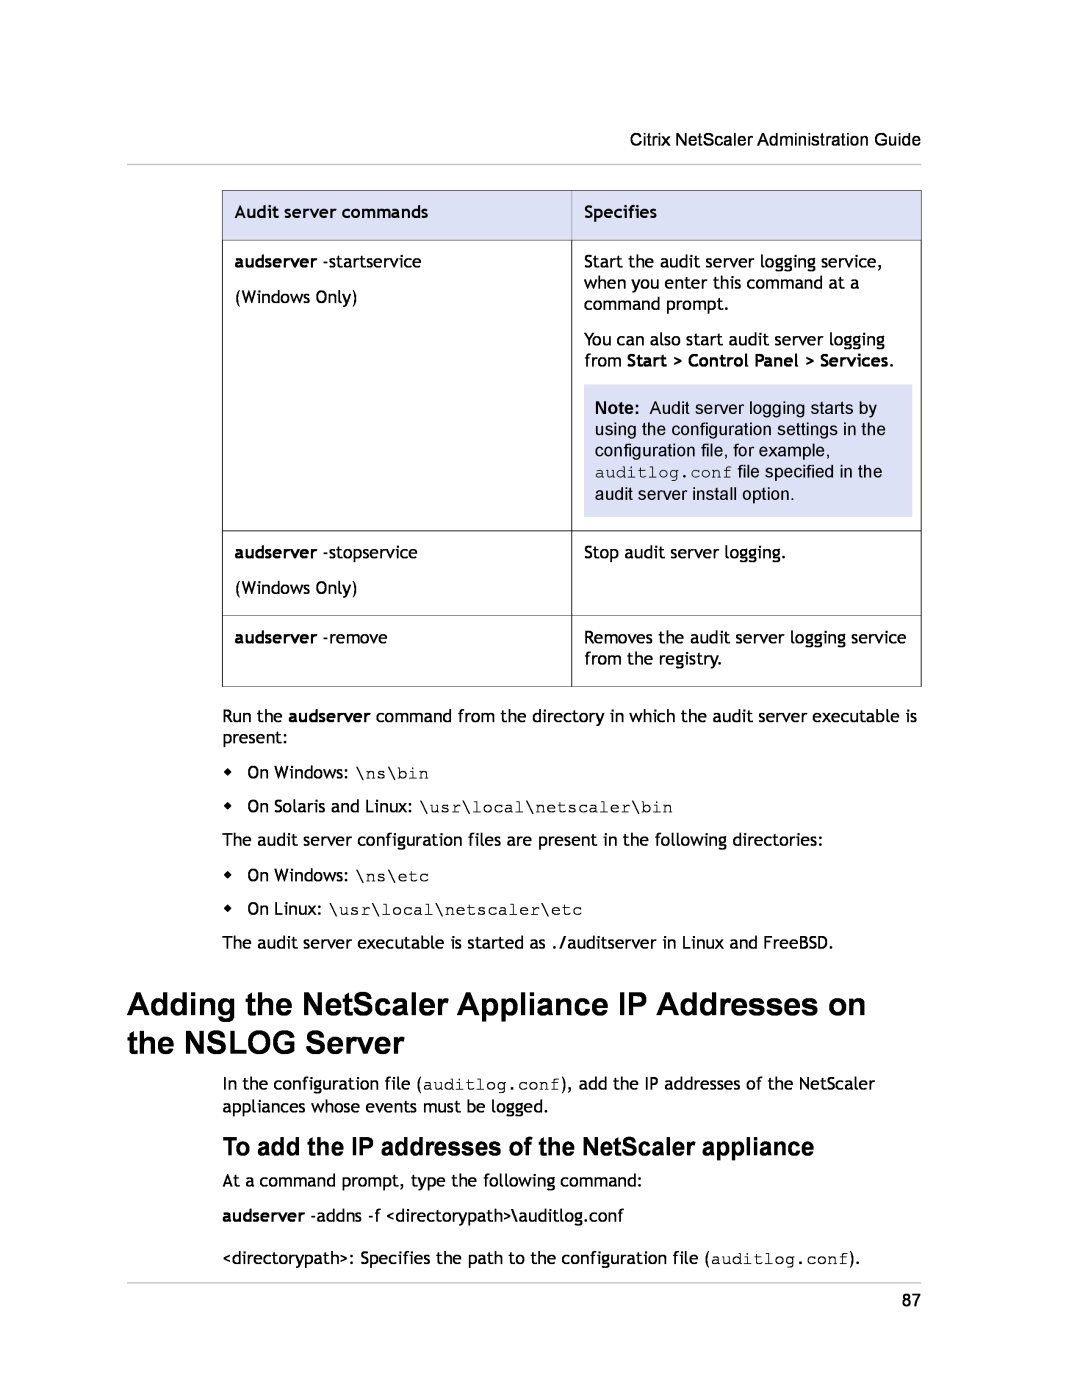 Citrix Systems CITRIX NETSCALER 9.3 Adding the NetScaler Appliance IP Addresses on the NSLOG Server, Audit server commands 